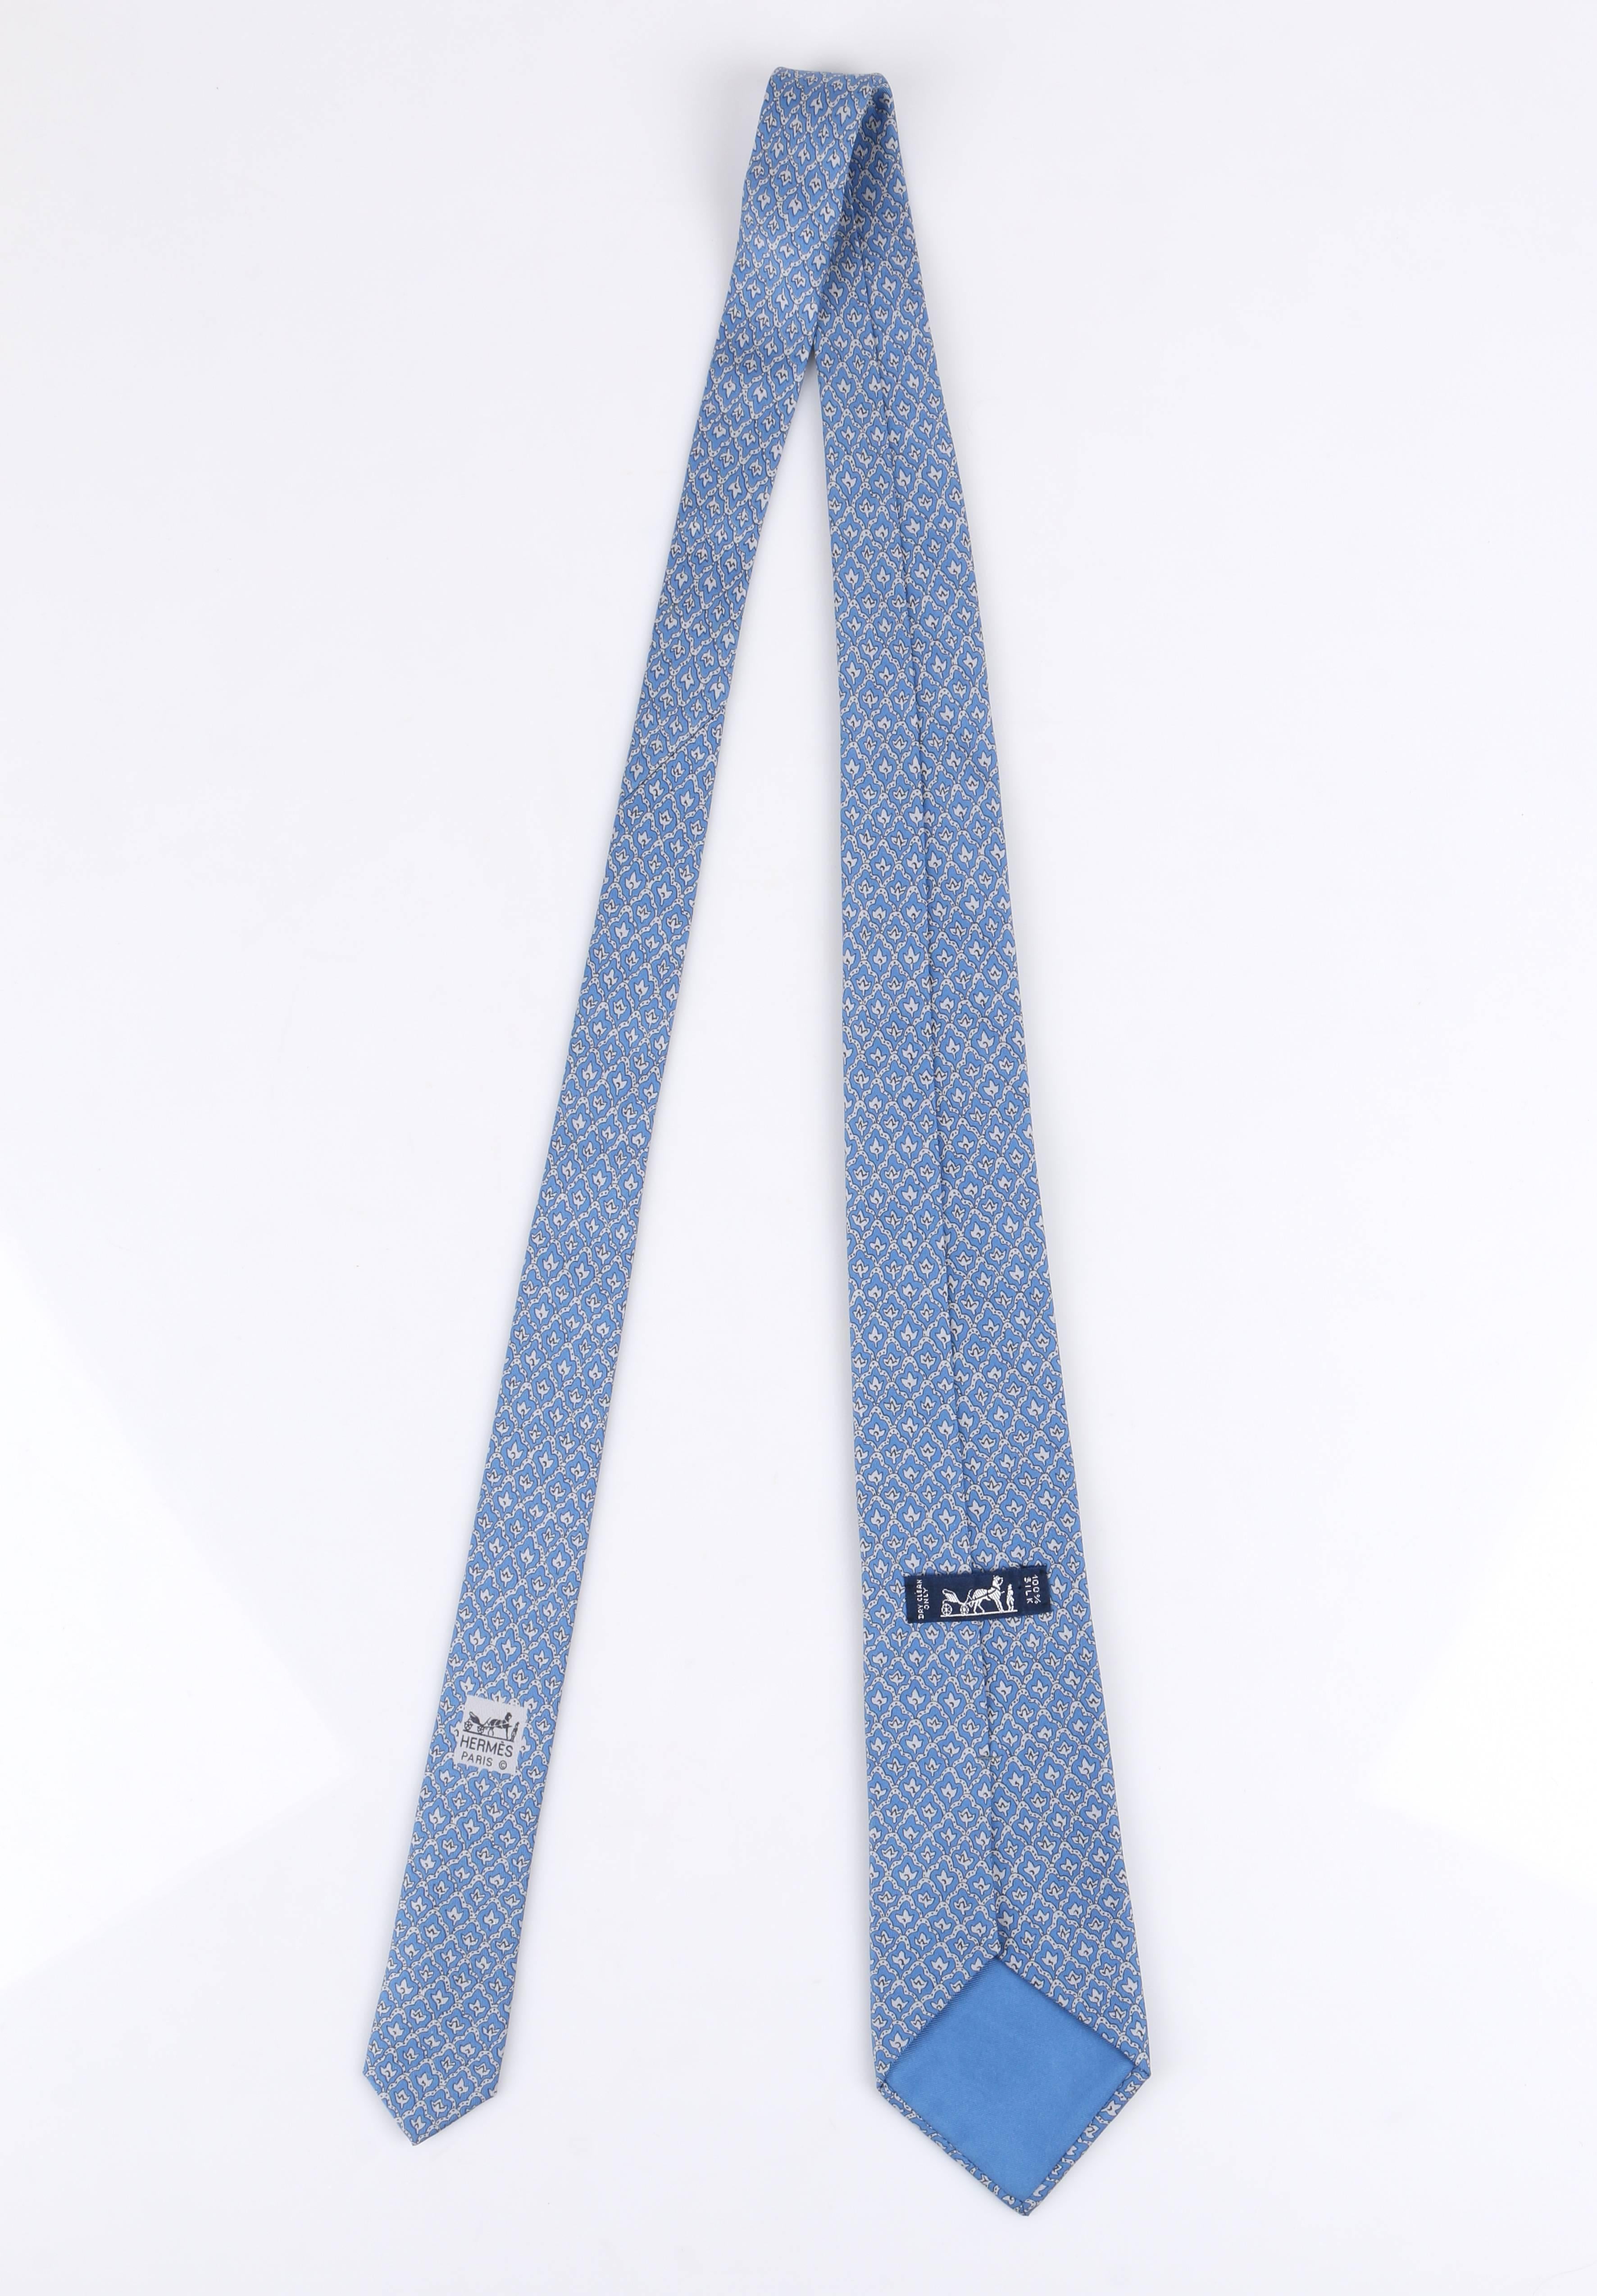 cornflower blue ties